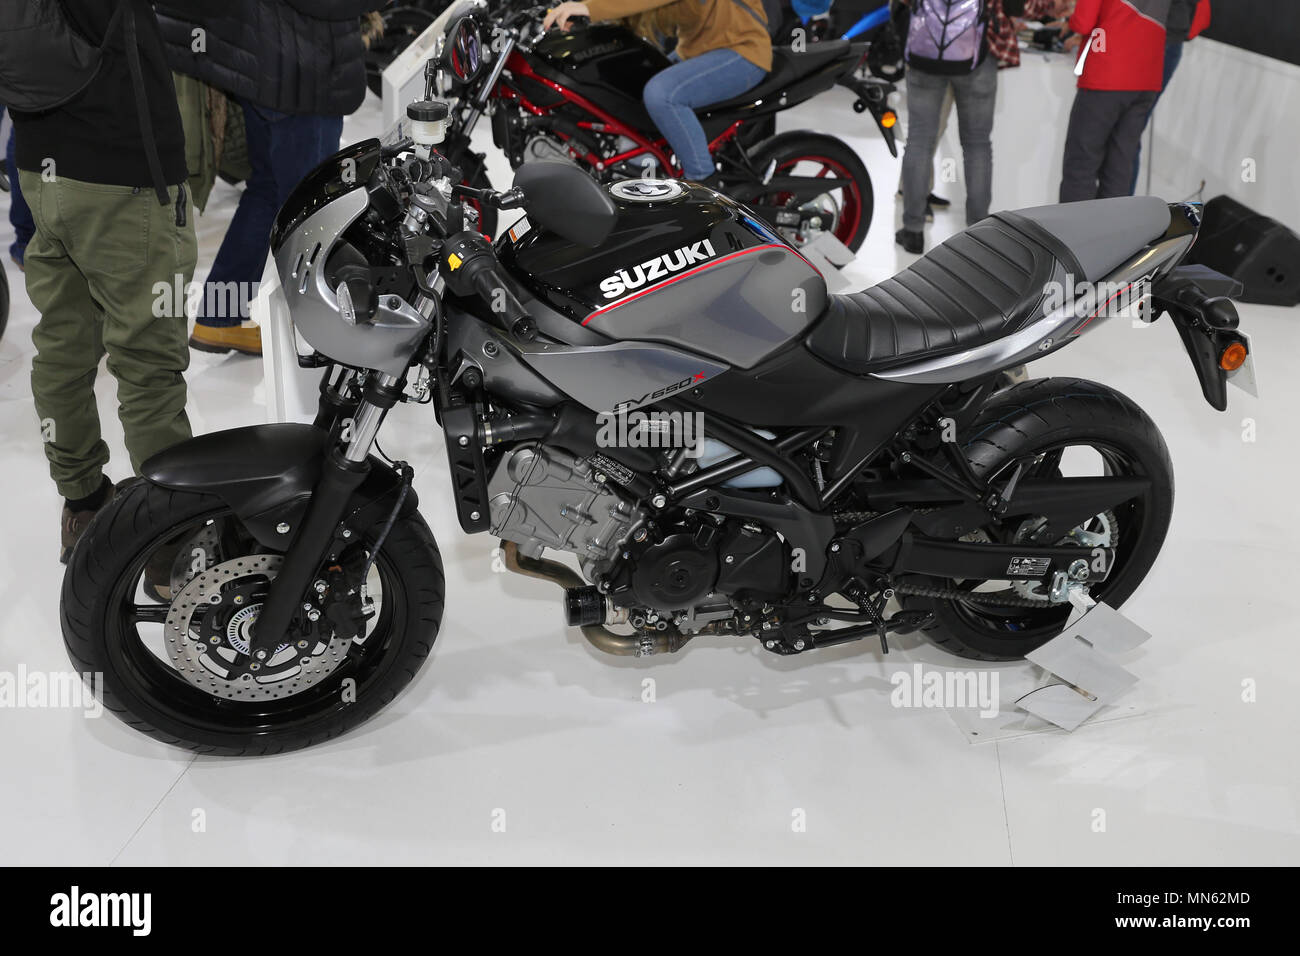 ISTANBUL, TURKEY - FEBRUARY 25, 2018: Suzuki SV650 X on display at Motobike Istanbul in Istanbul Exhibition Center Stock Photo